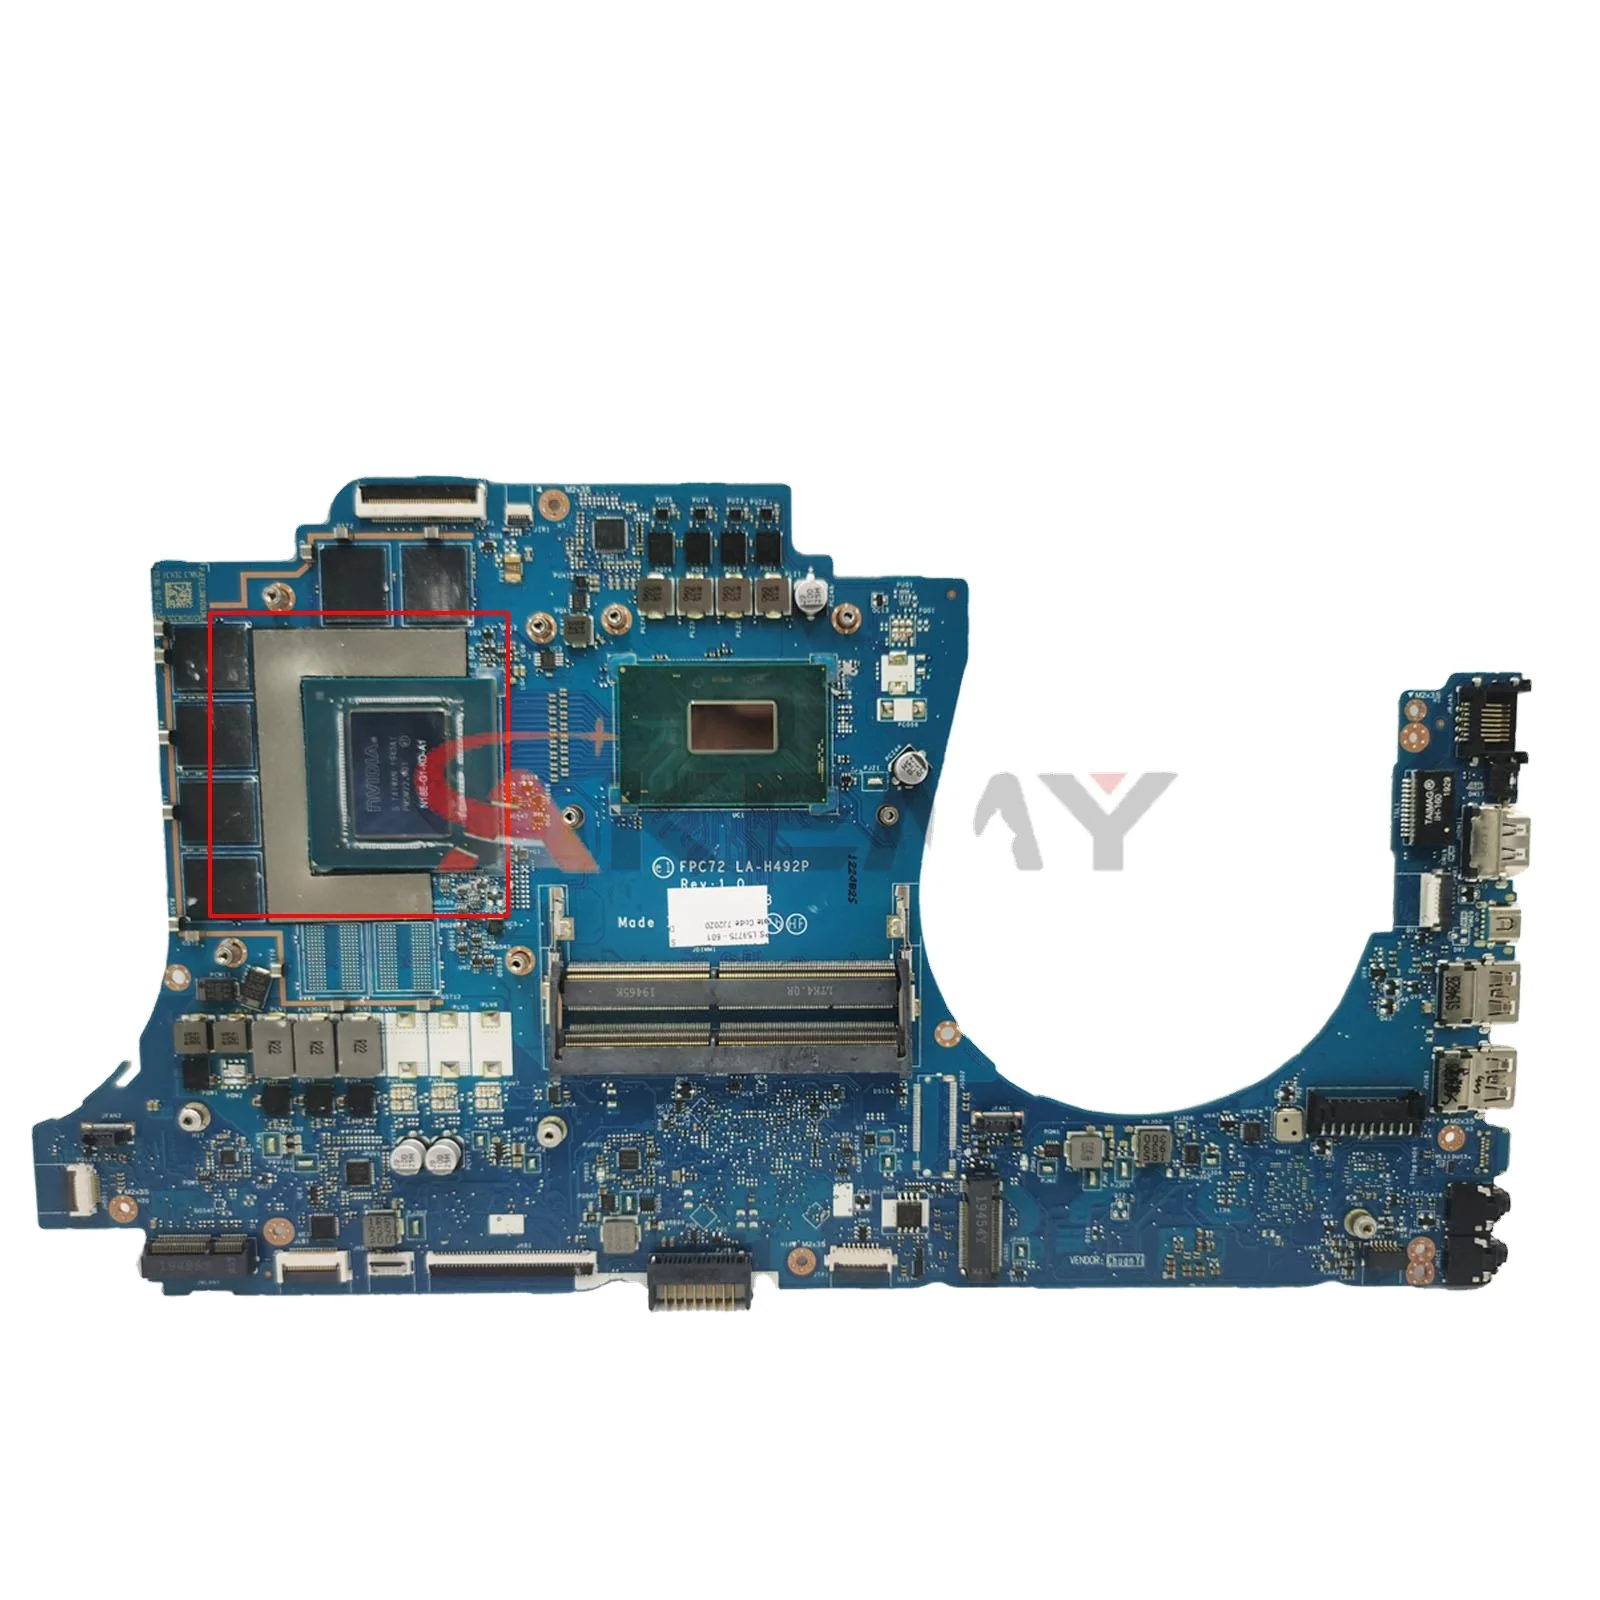 

Mainboard For HP 17-CB 17T-CB LA-H492P Laptop Motherboard With SRF6U I7-9750H CPU RTX2060 GTX1660TI 6G GPU 100%Full Working Well